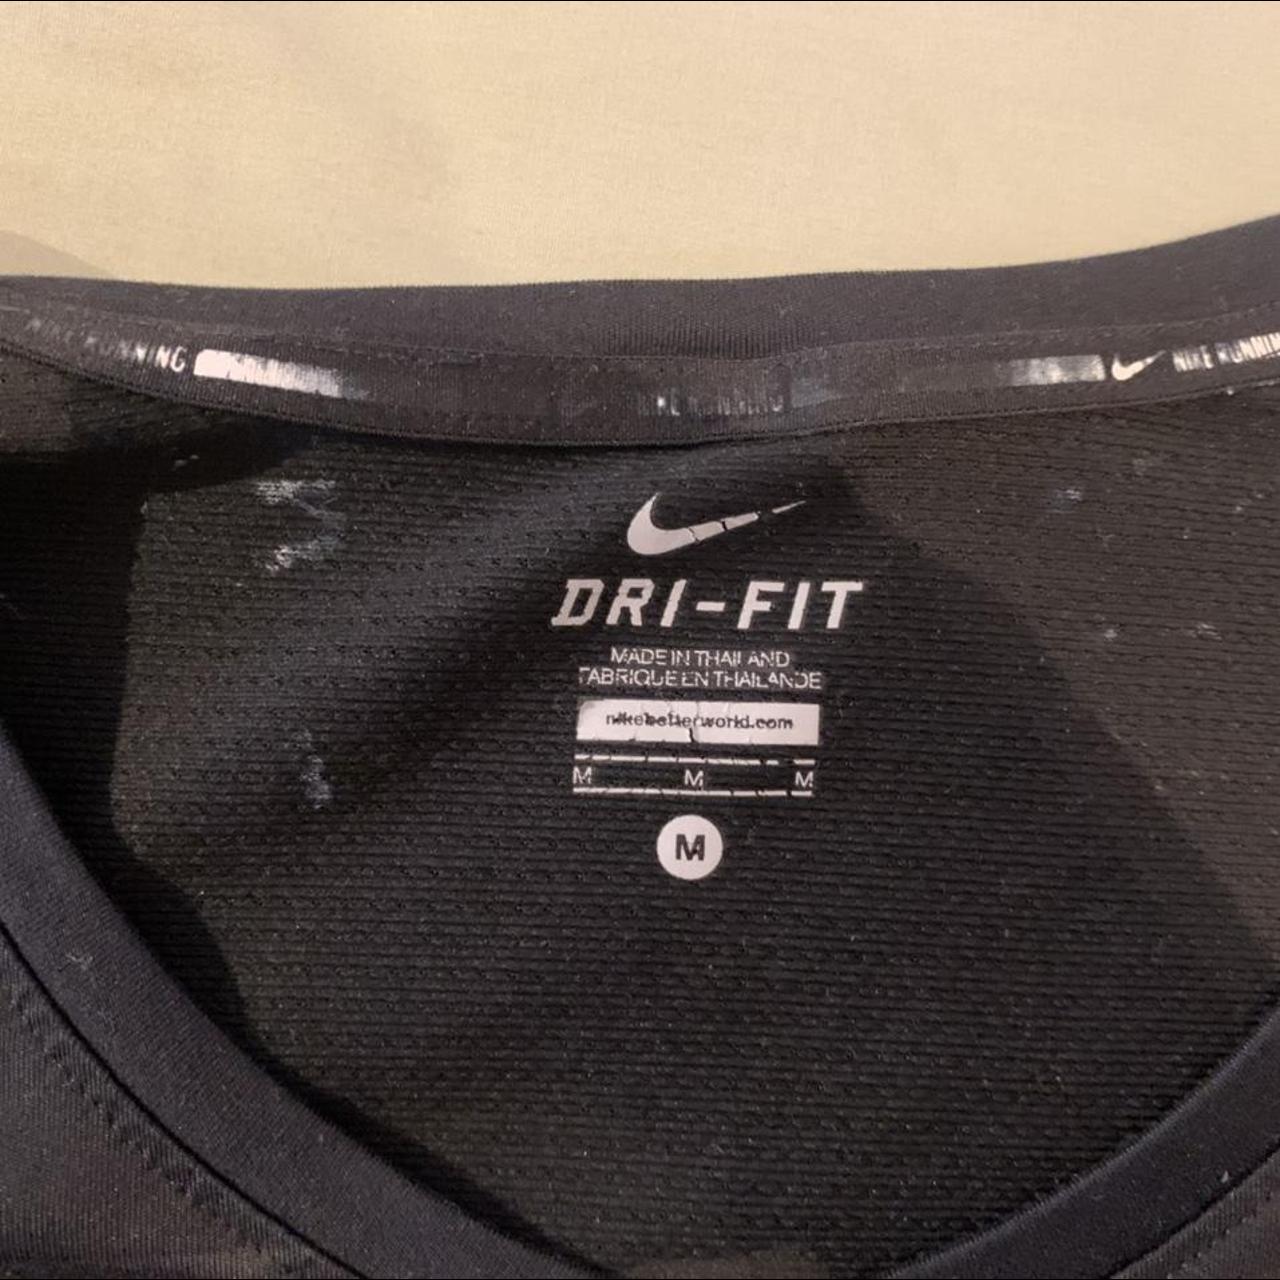 Nike Dri-fit black T-shirt #nike #drifit #sport #black - Depop